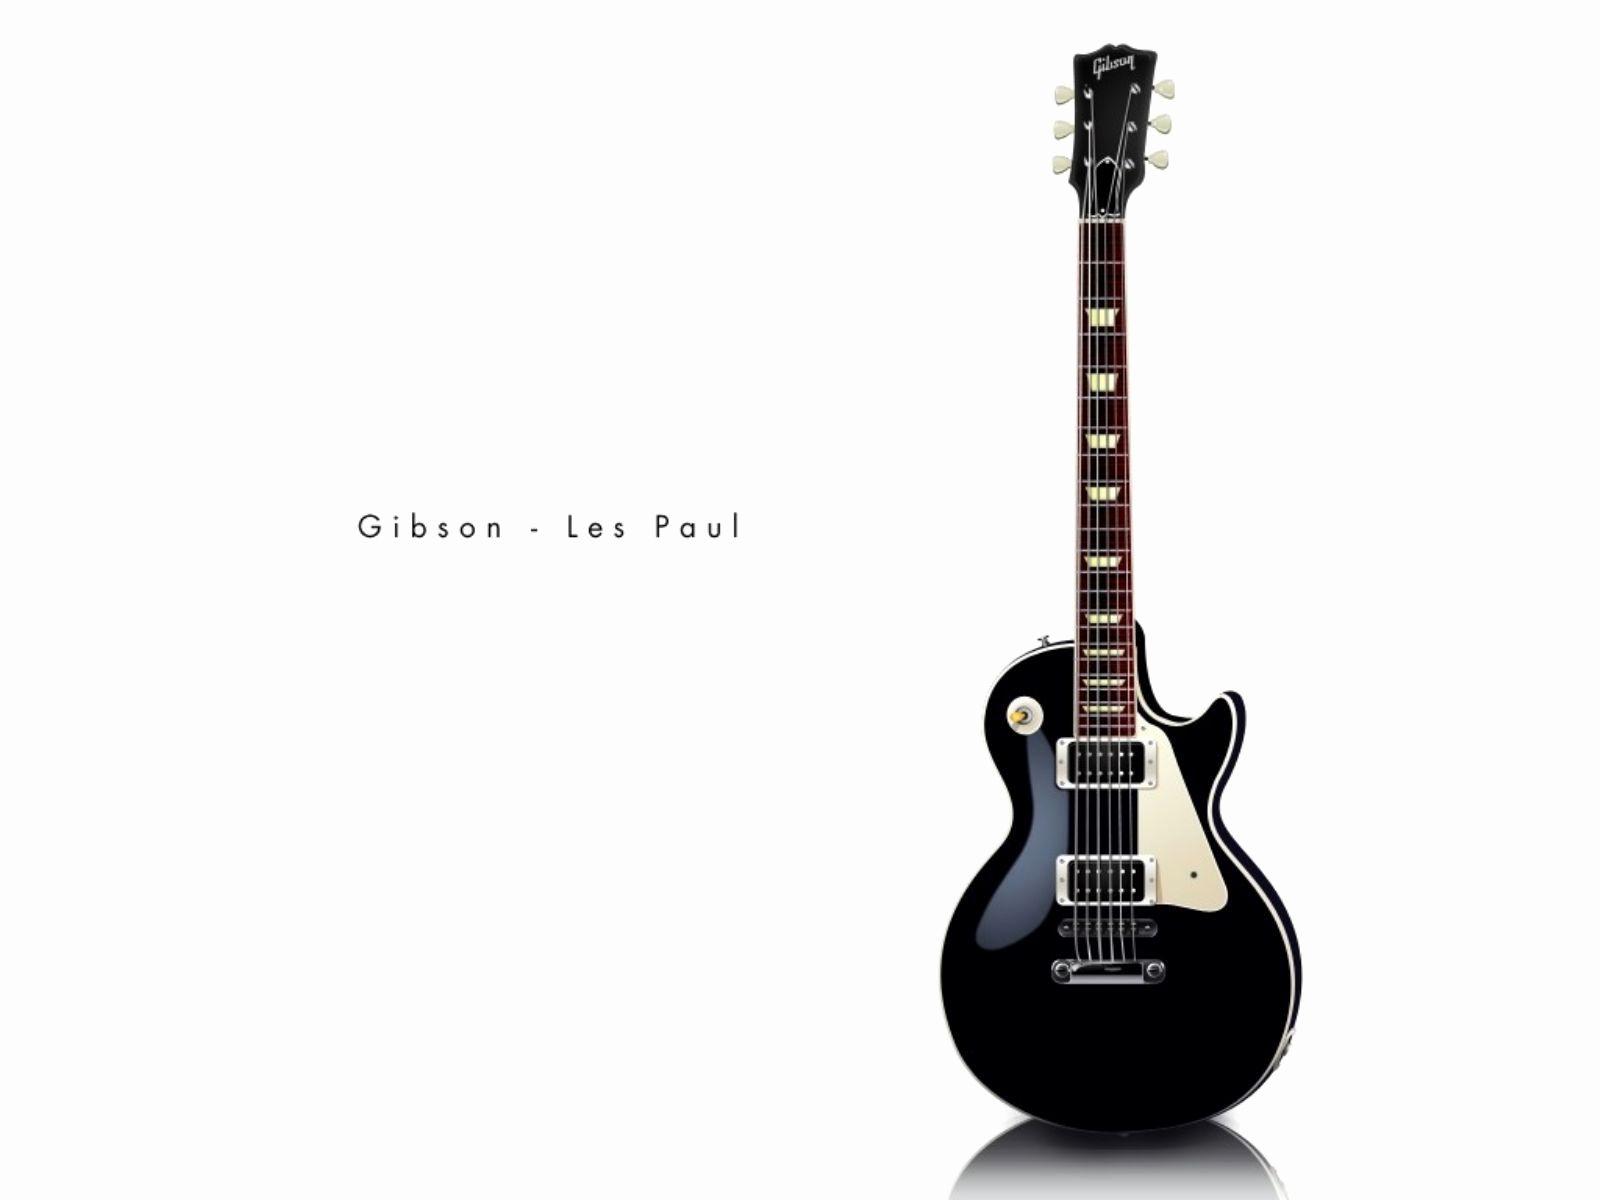 Gibson Acoustic Guitar Bridge HD Picture Wallpaper Free Download